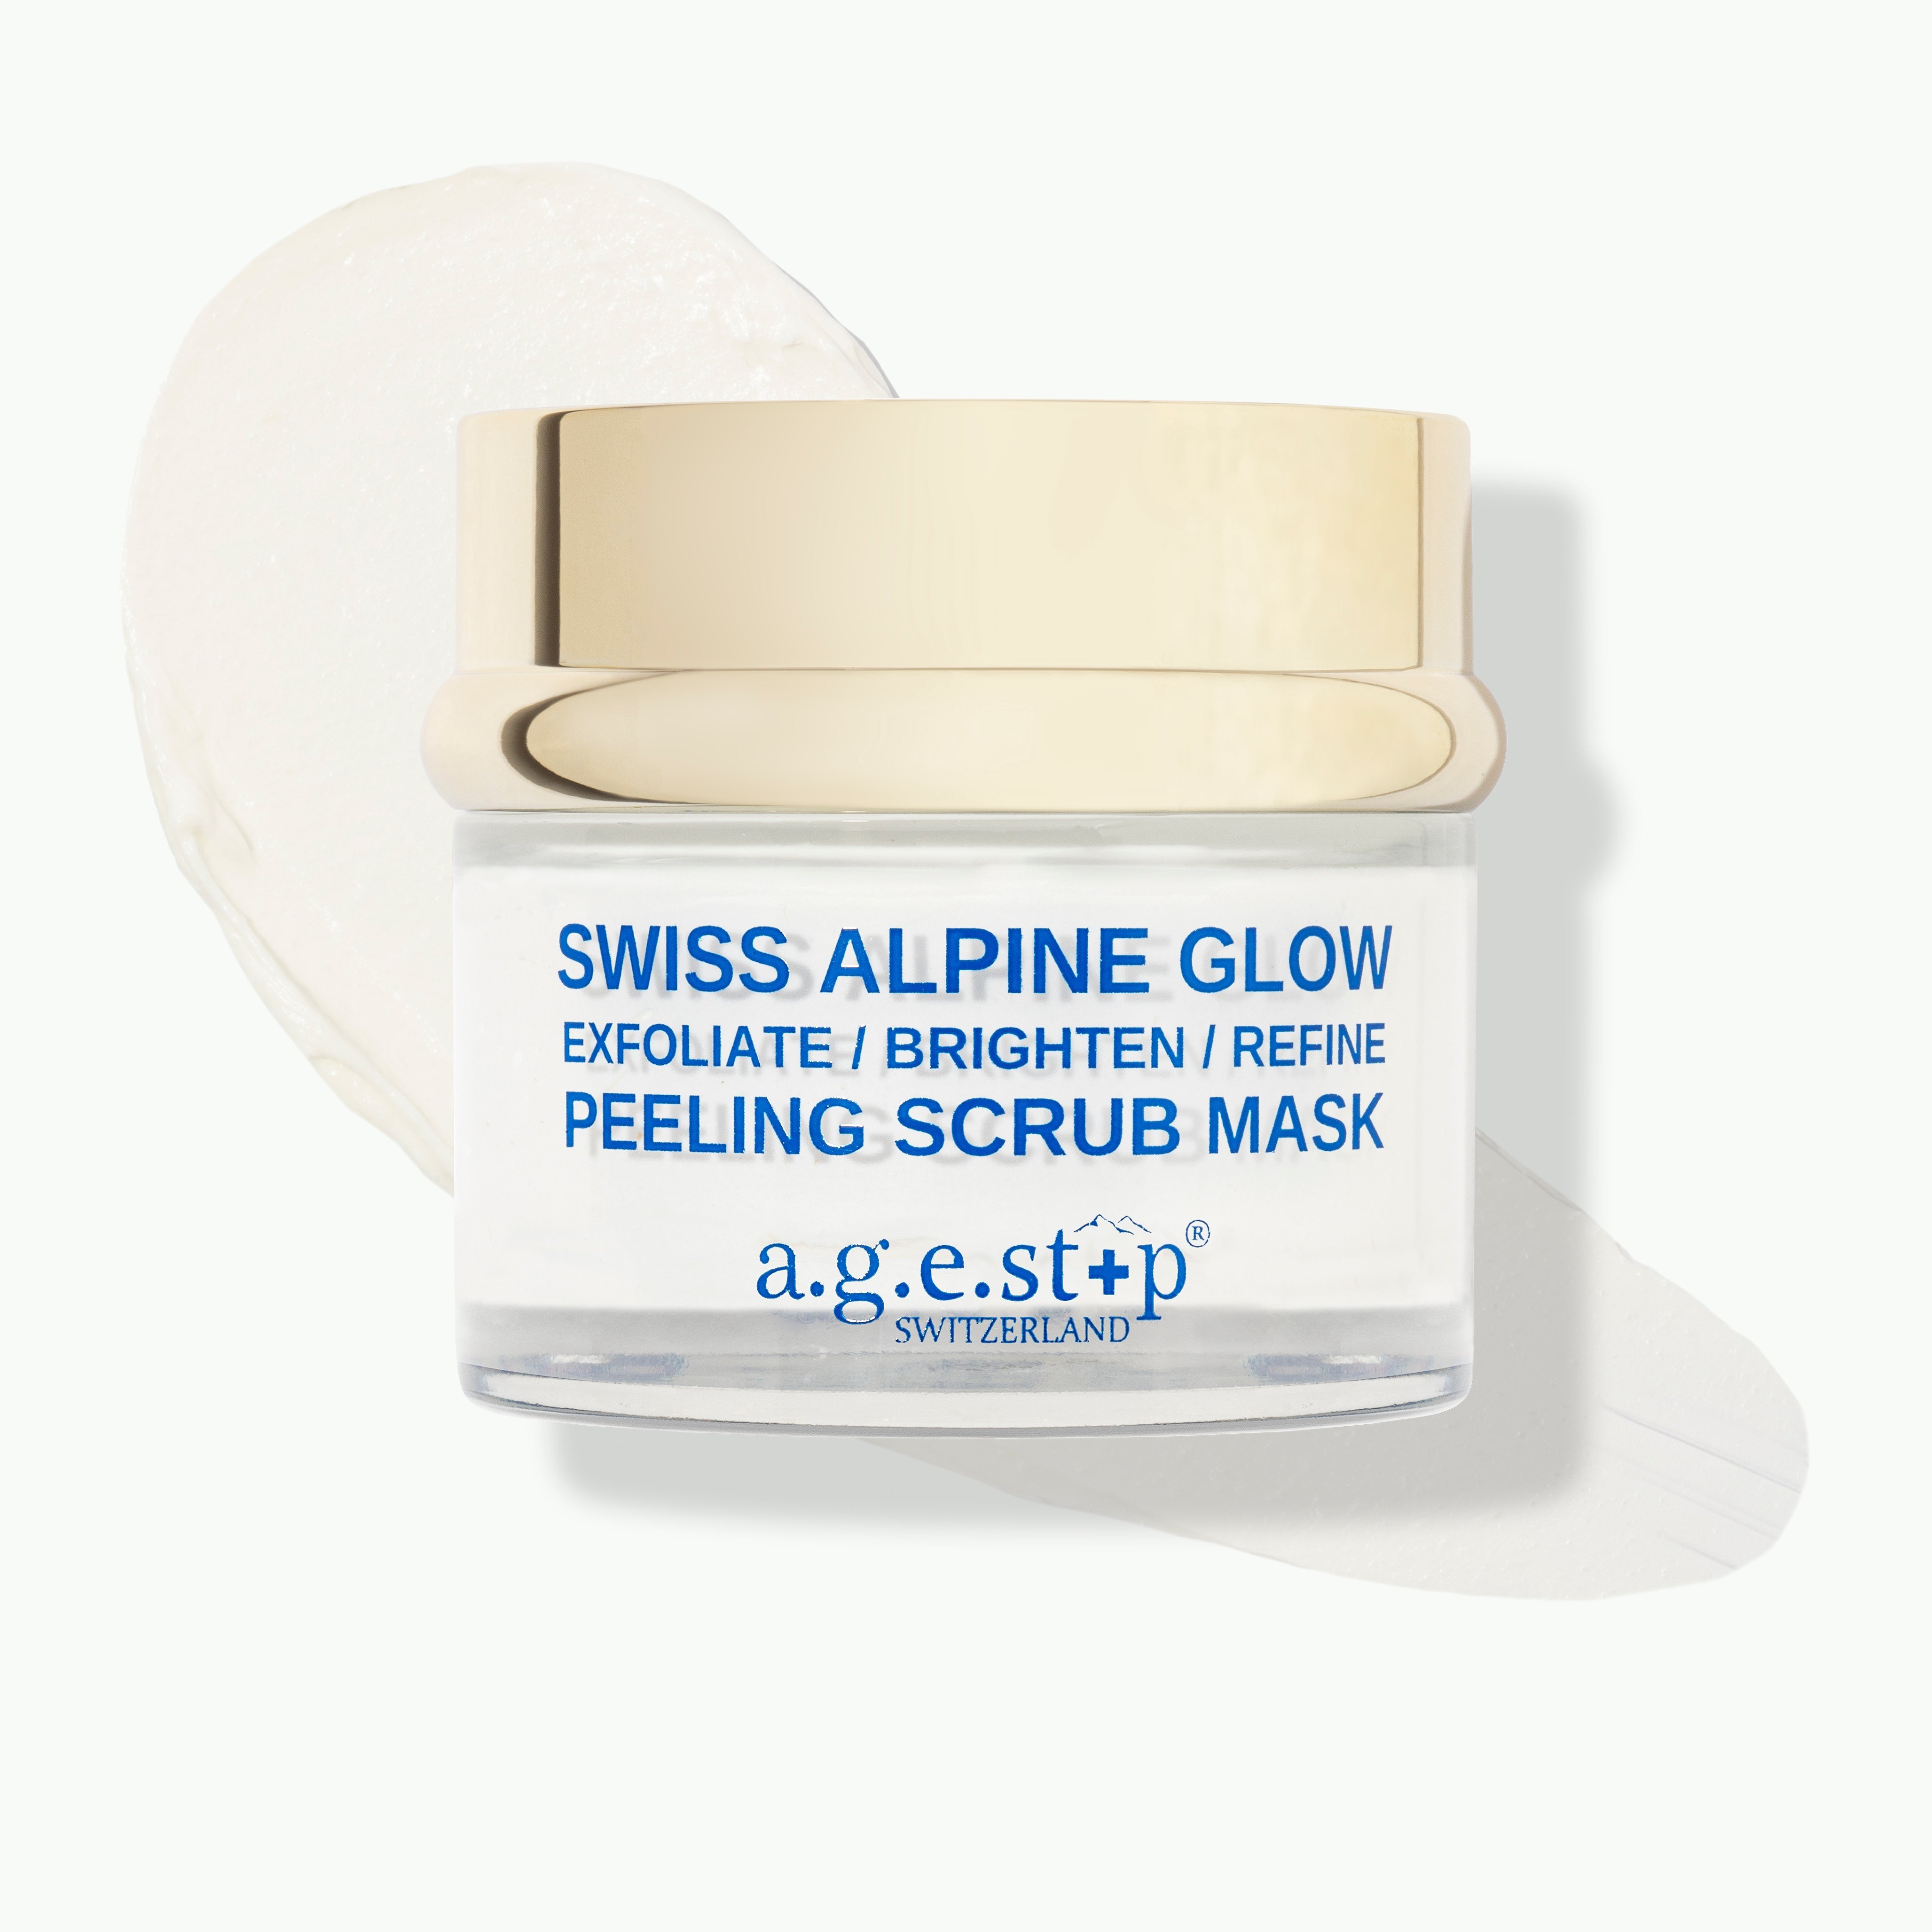 SWISS ALPINE GLOW PEELING SCRUB MASK - Agestop Switzerland